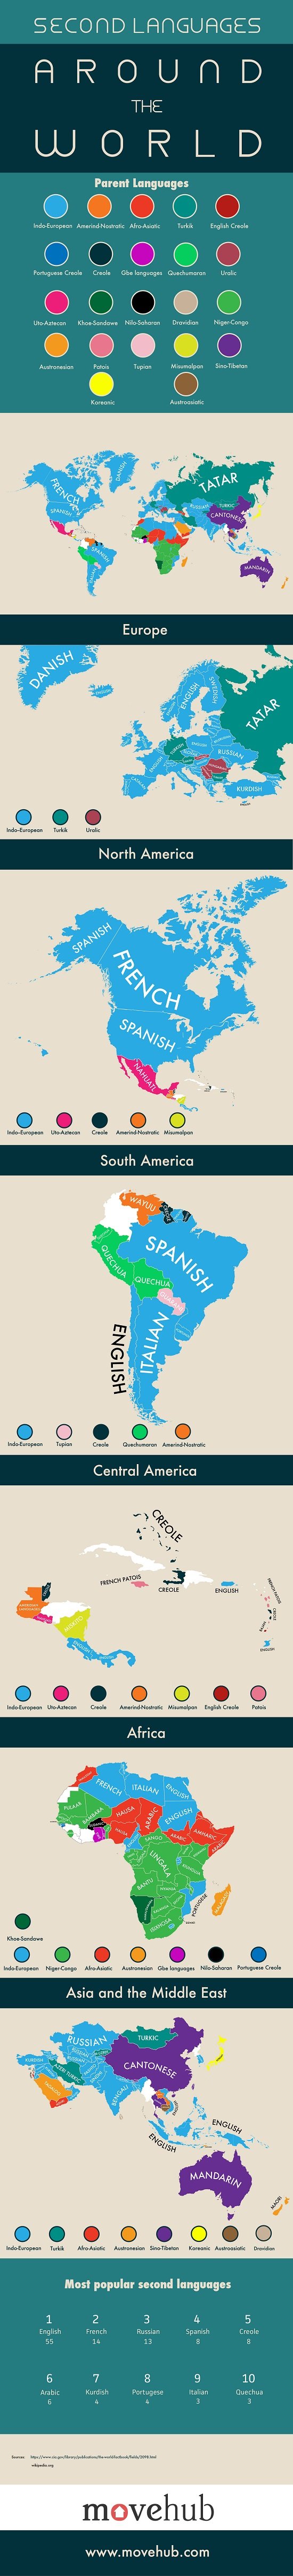 second languages map